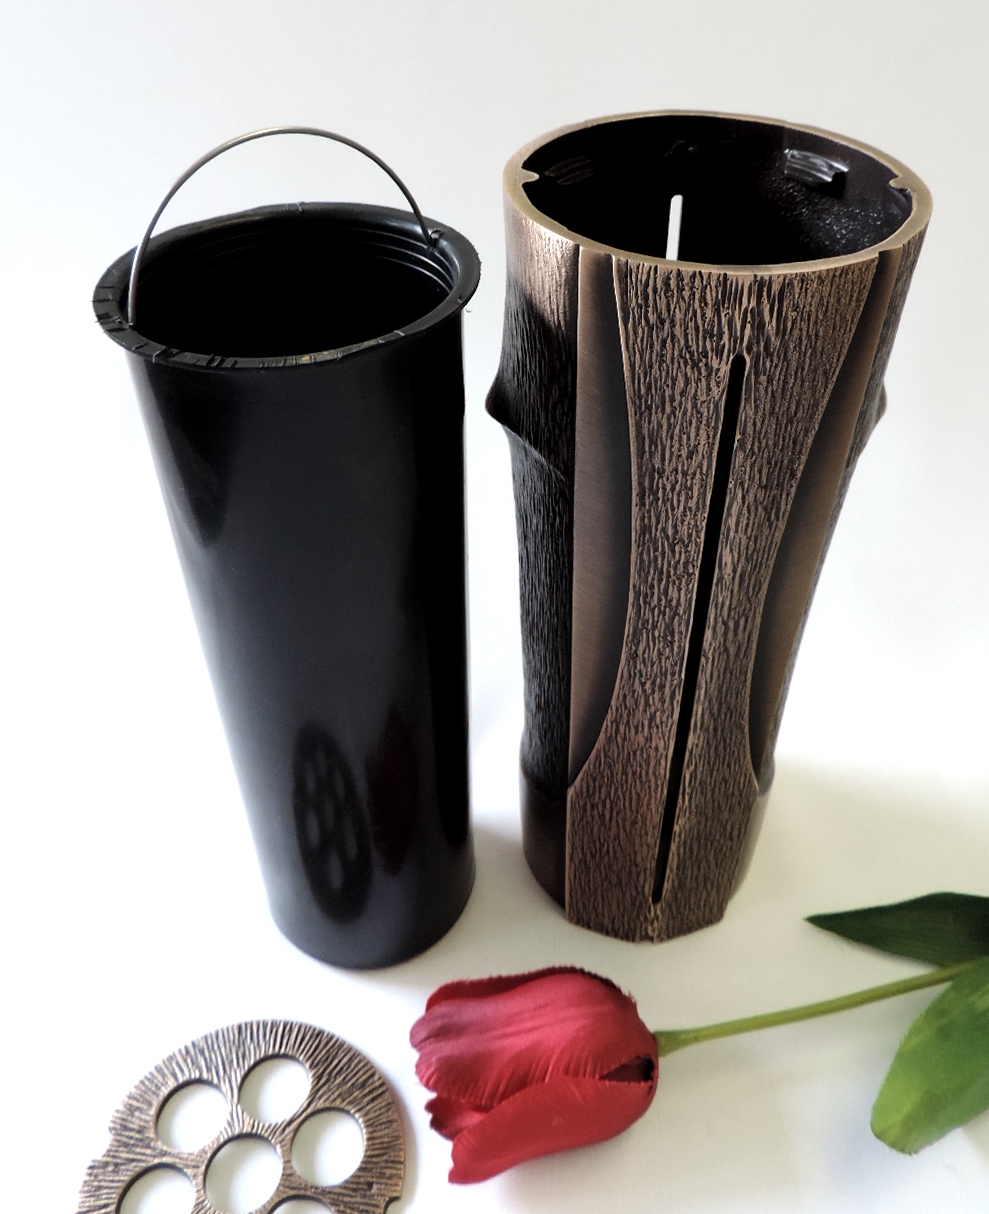 Traditionelle Grabvase, Grabschmuck, Vase